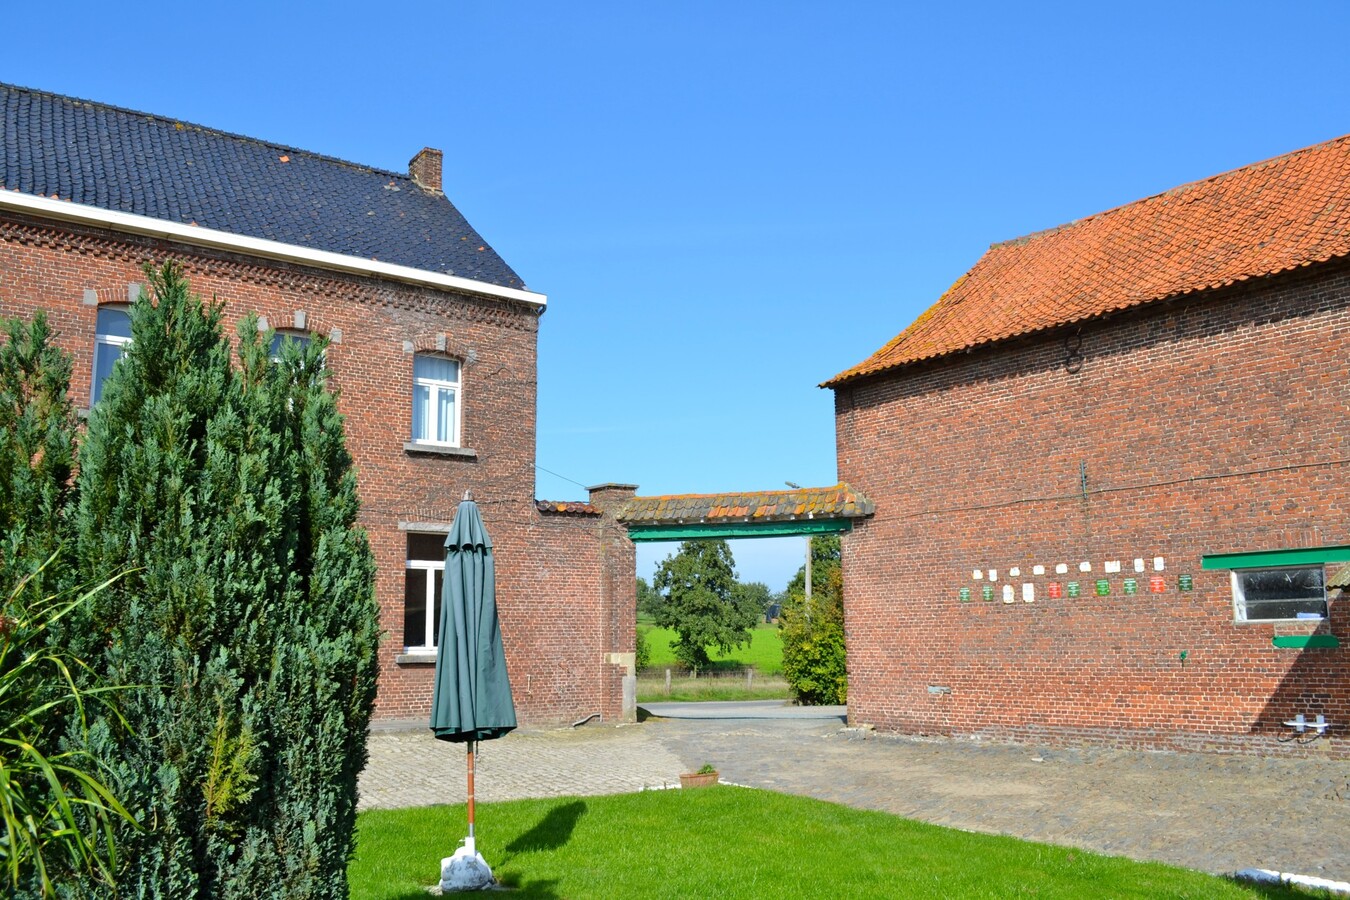 Property sold in Bogaarden